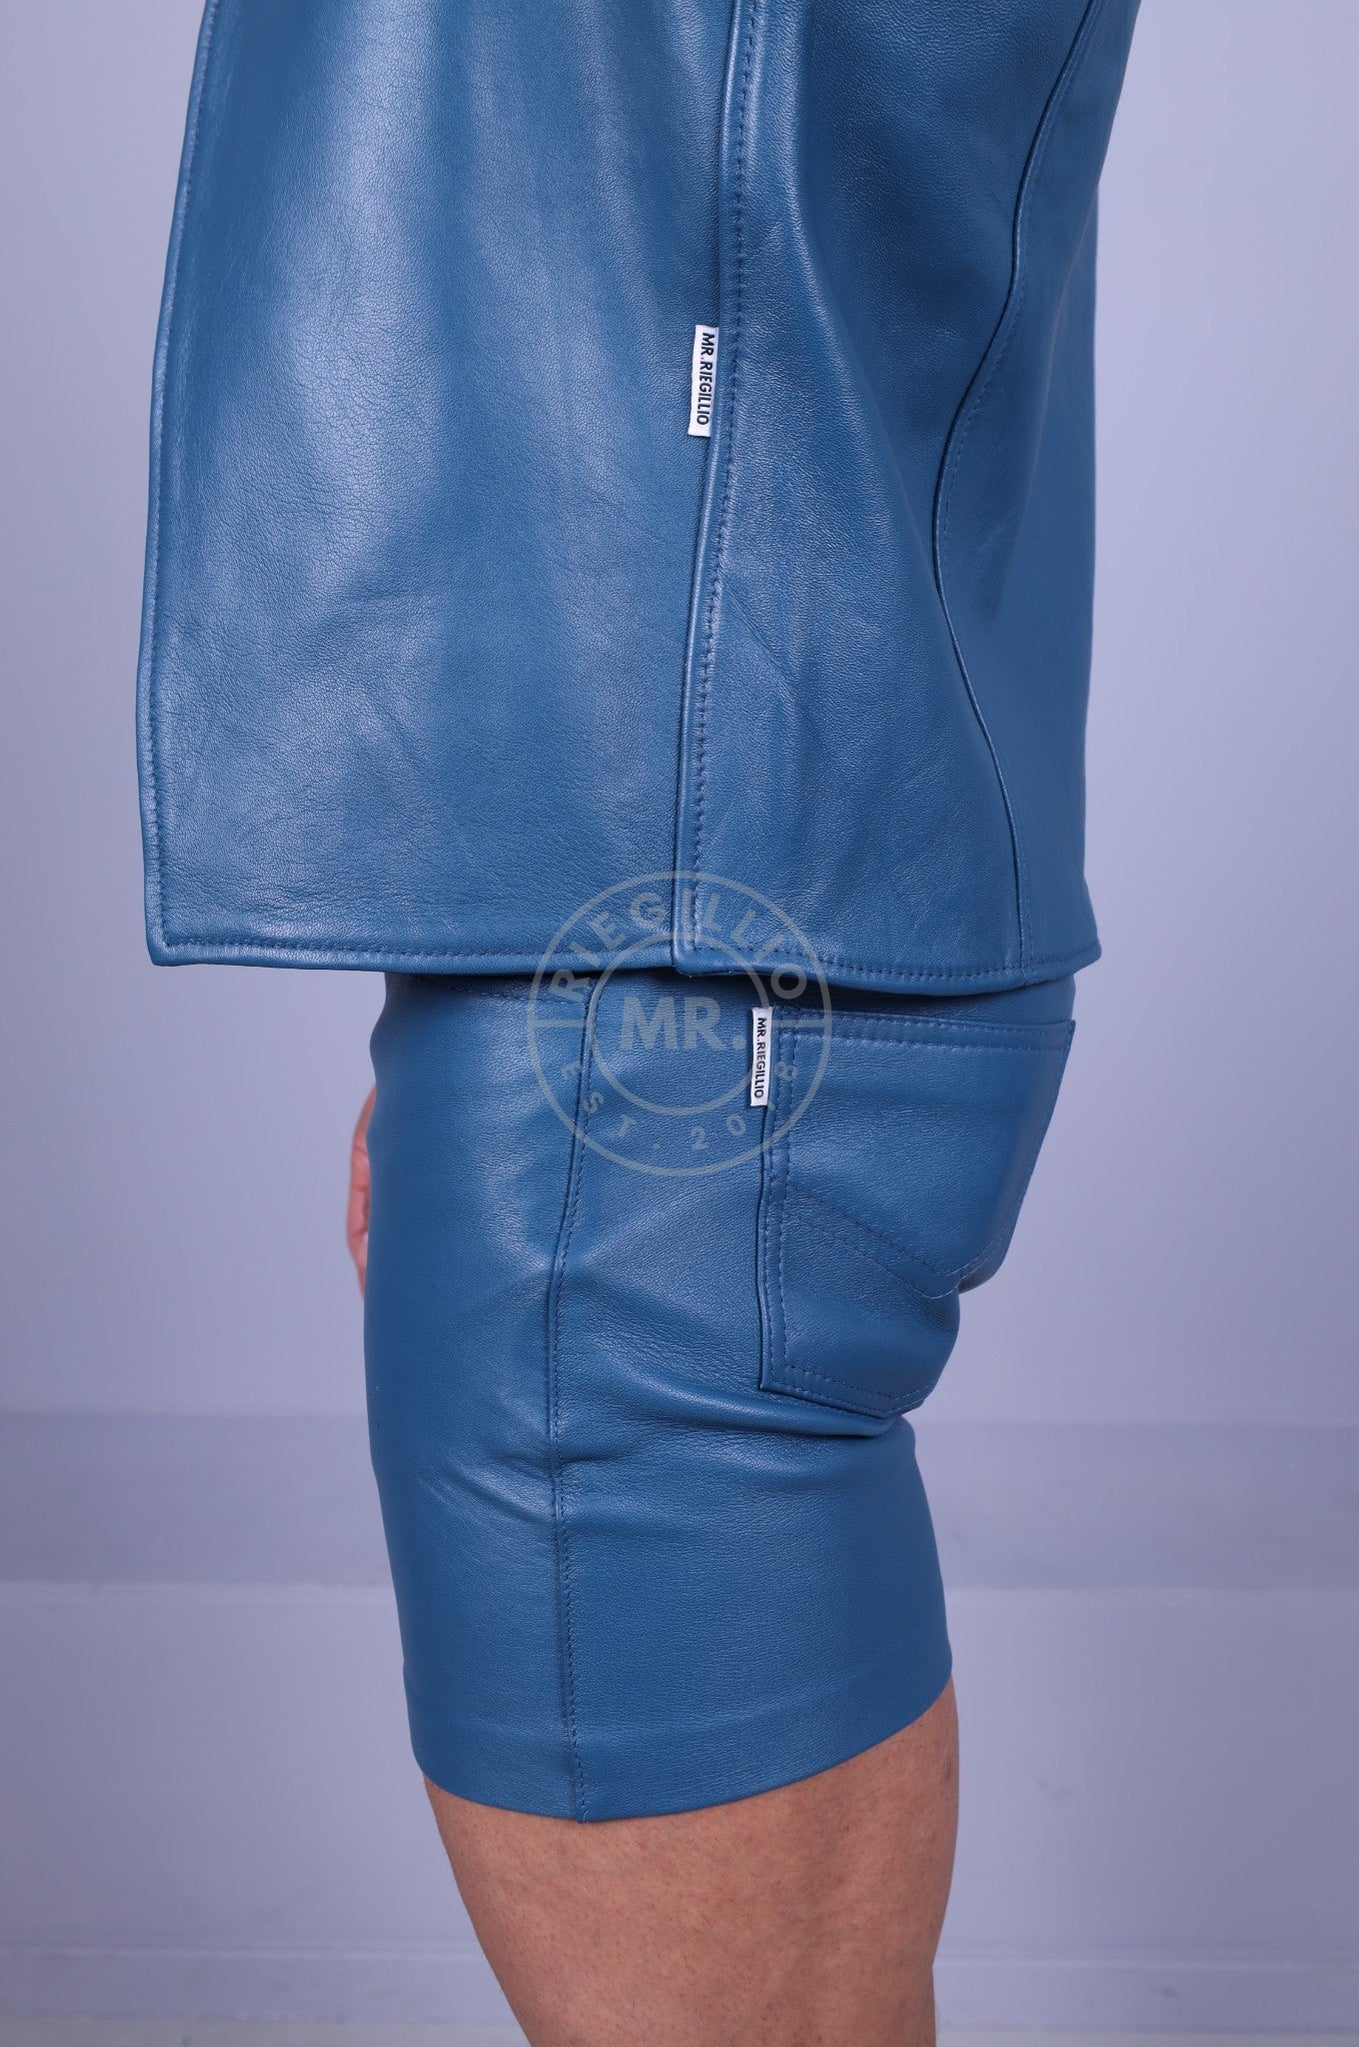 Leather Waistcoat - Jeans Blue at MR. Riegillio